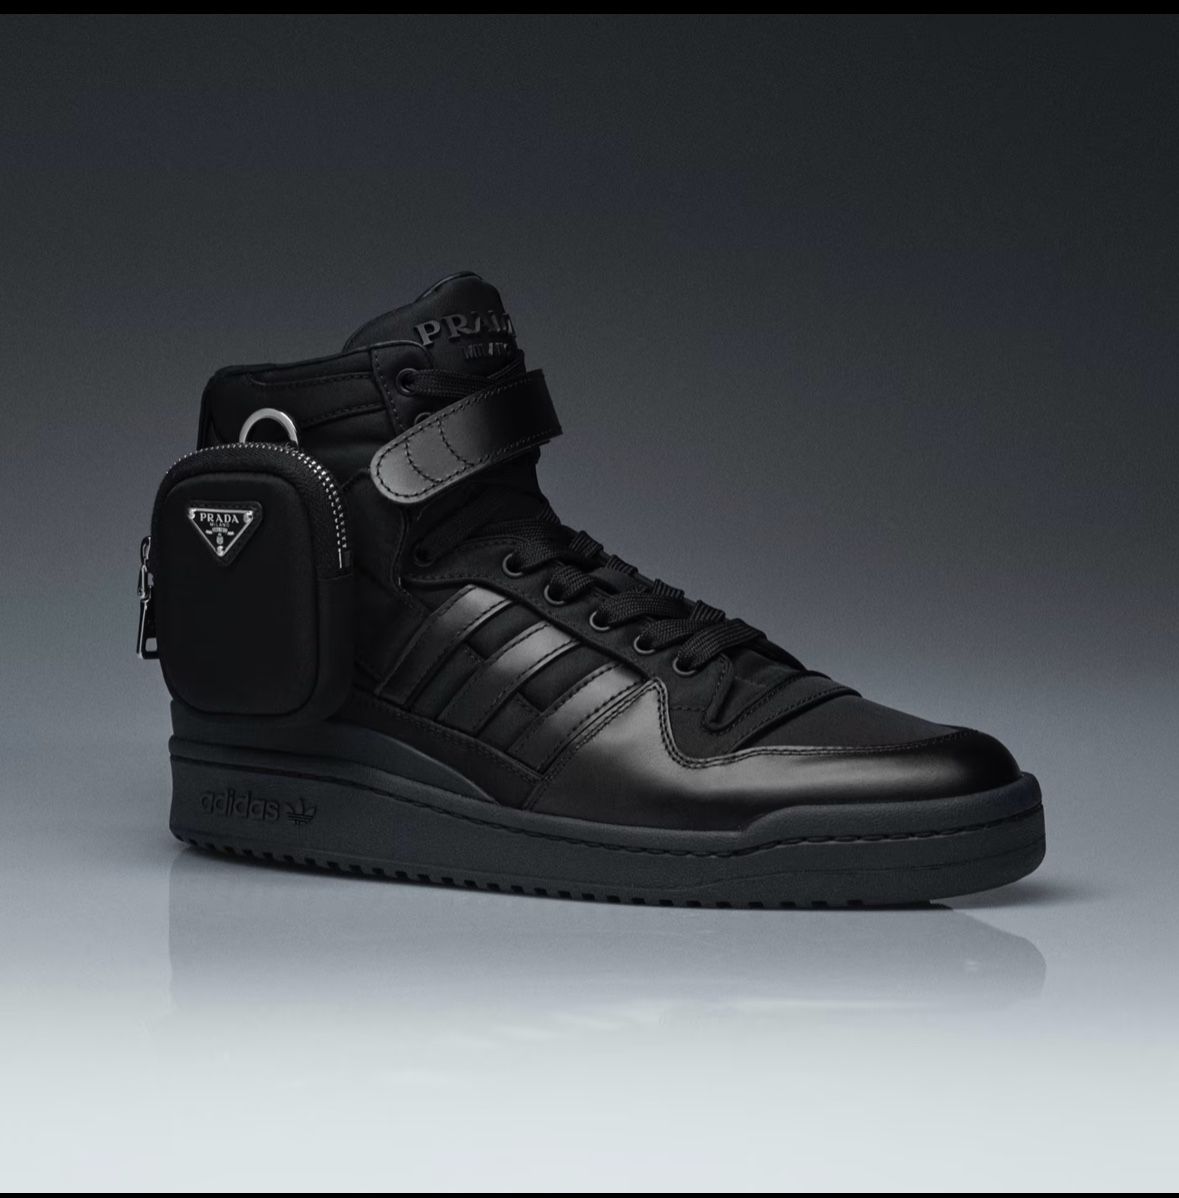 Prada /Adidas Collaboration Sneakers 